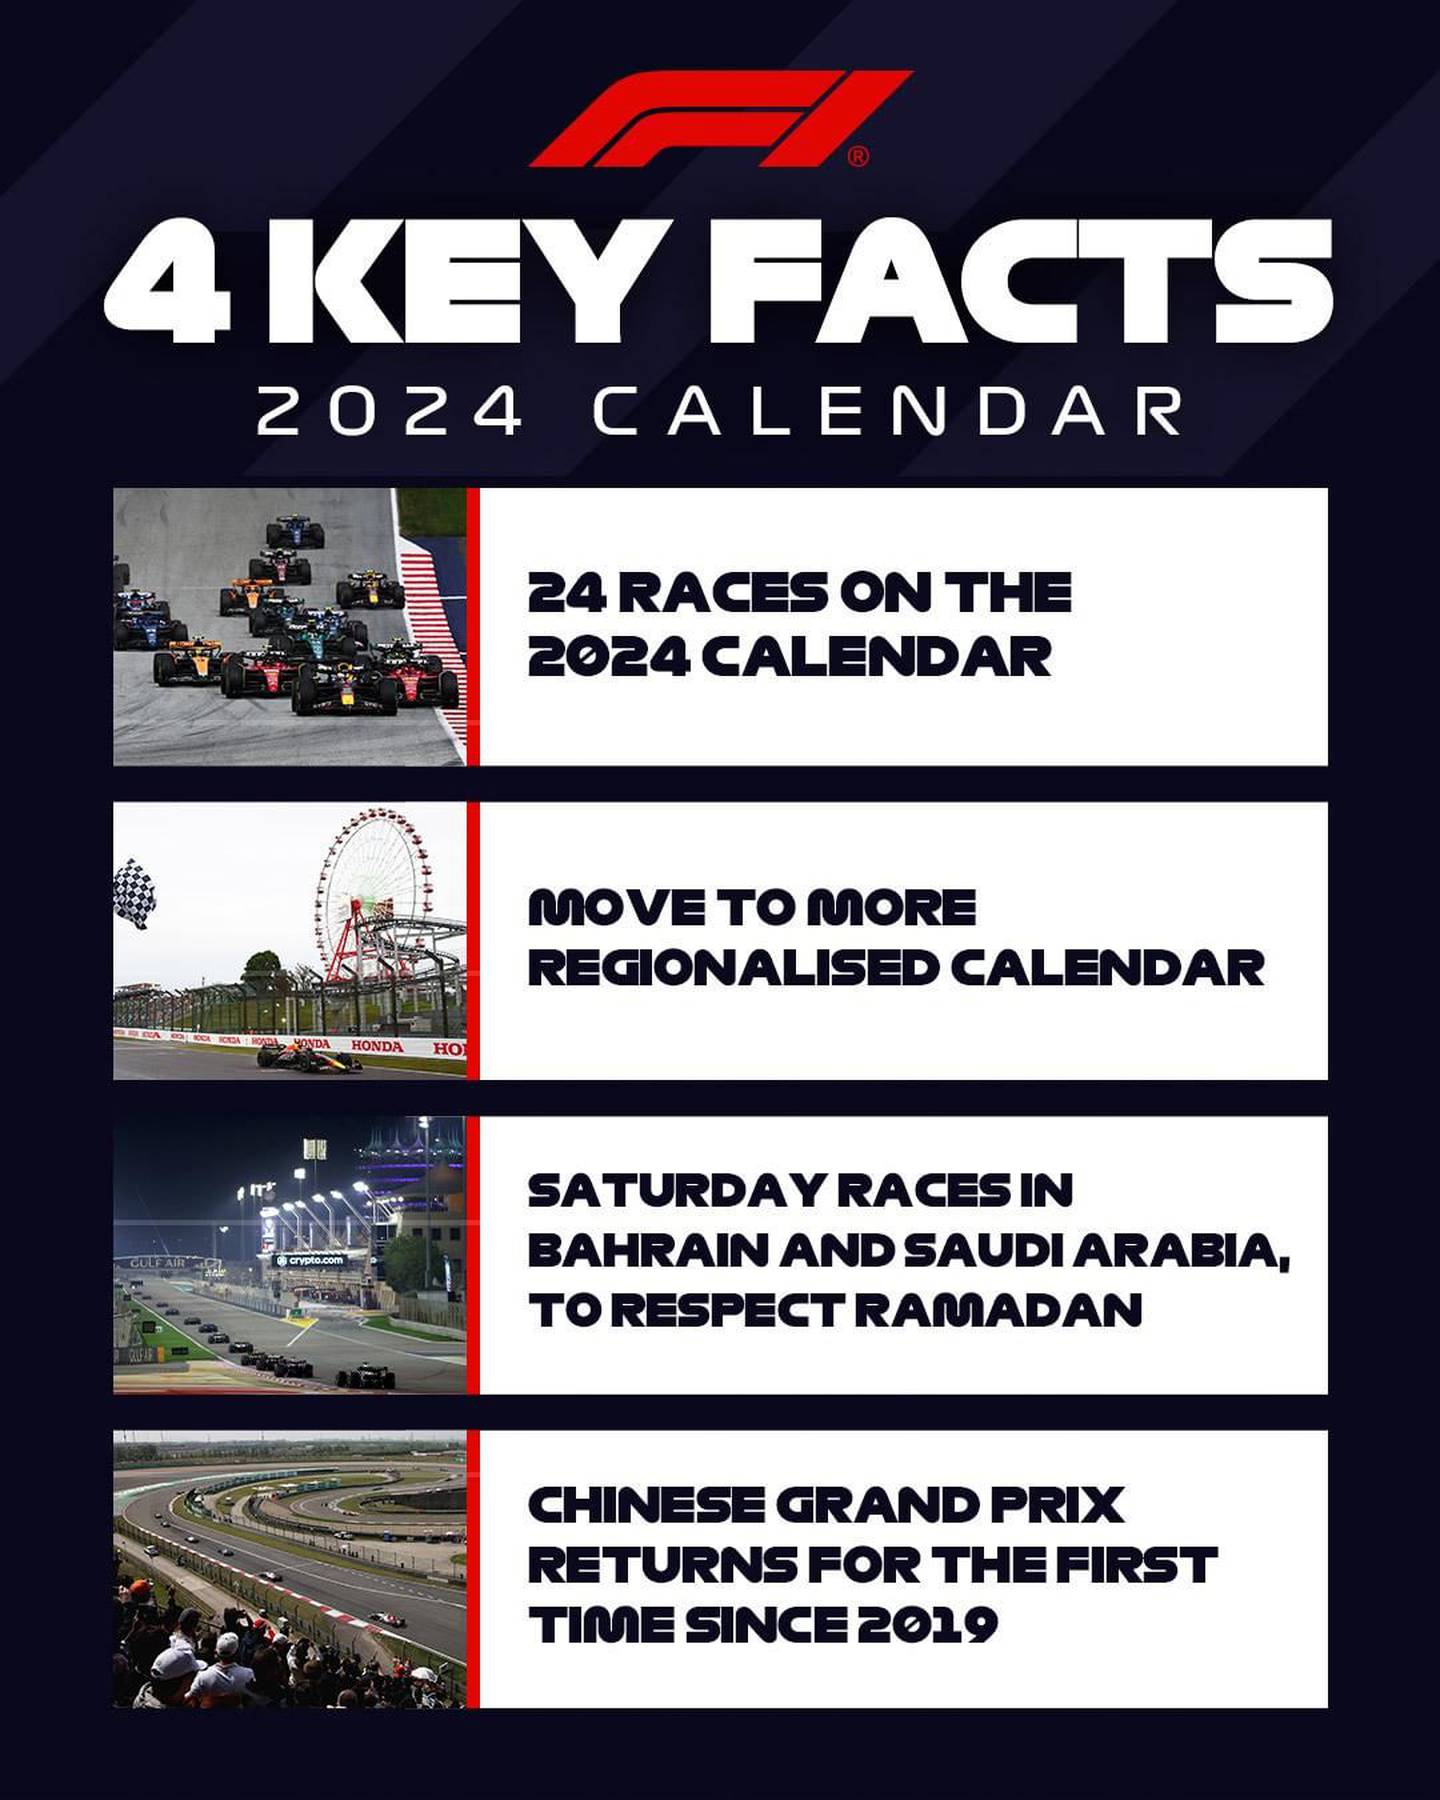 F1 2024 calendar What great prizes will 'Checo' Pérez run on Saturday?